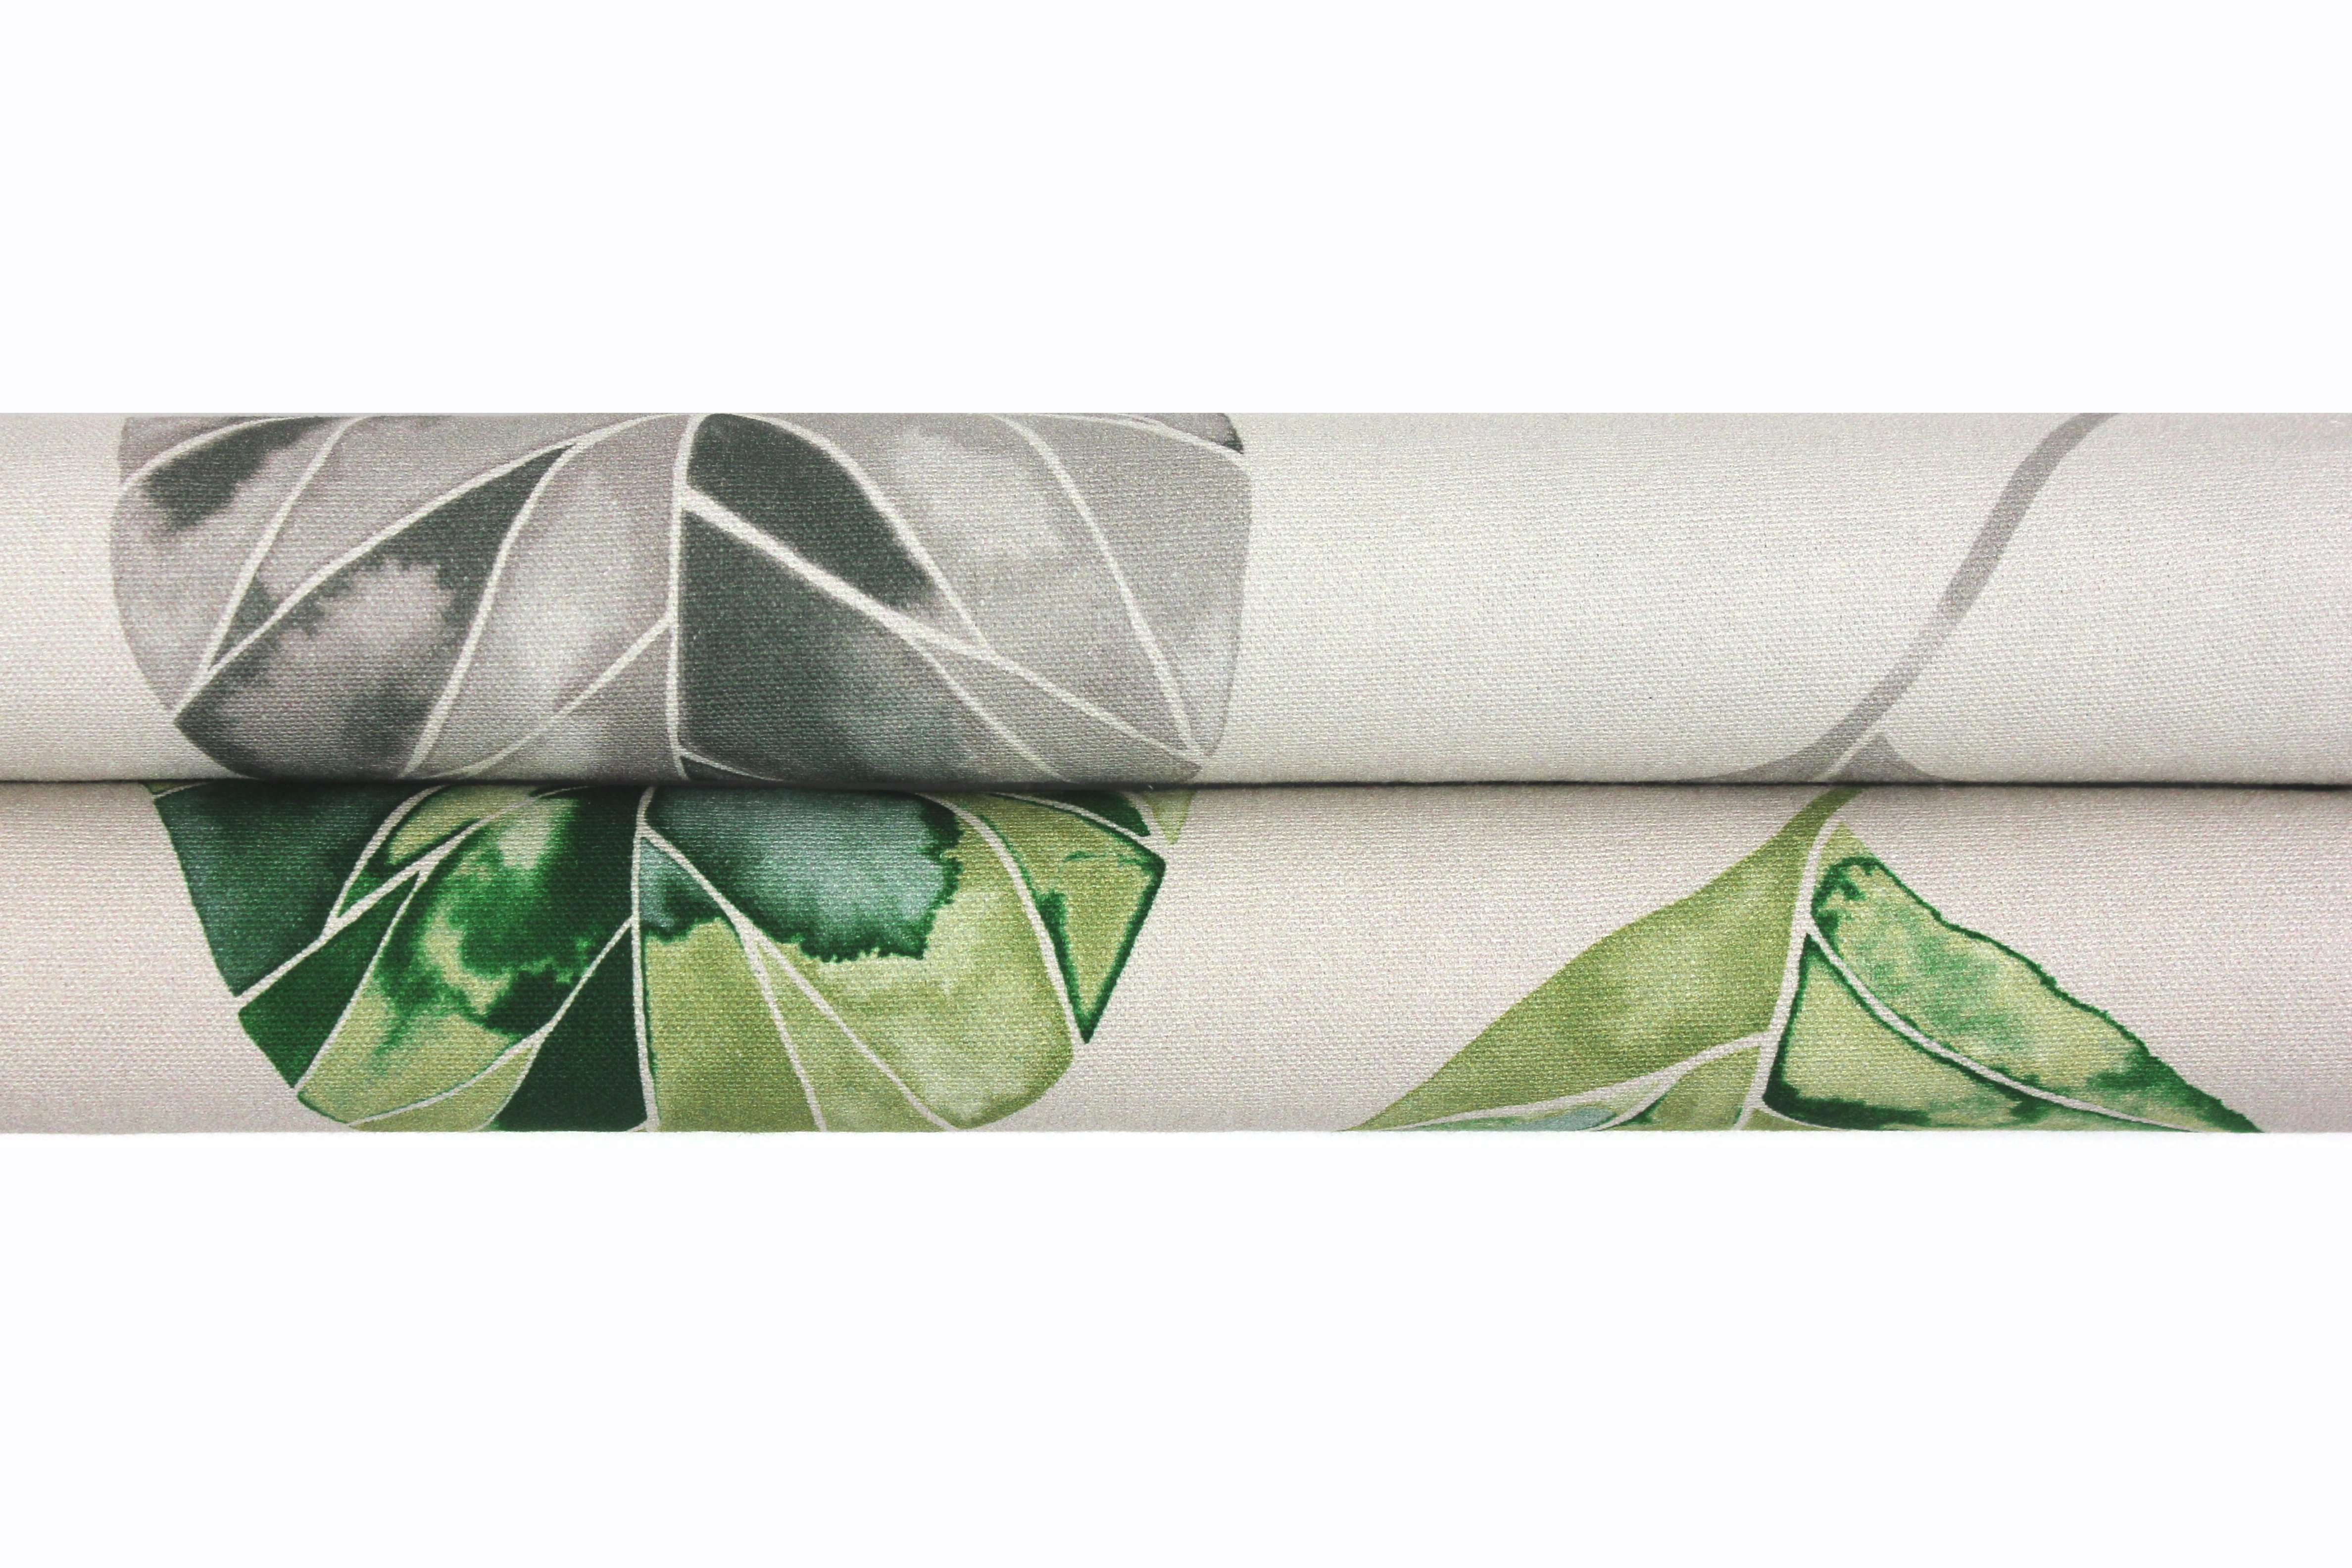 Duck Egg Blue Floral Print Cotton Fabric – McAlister Textiles